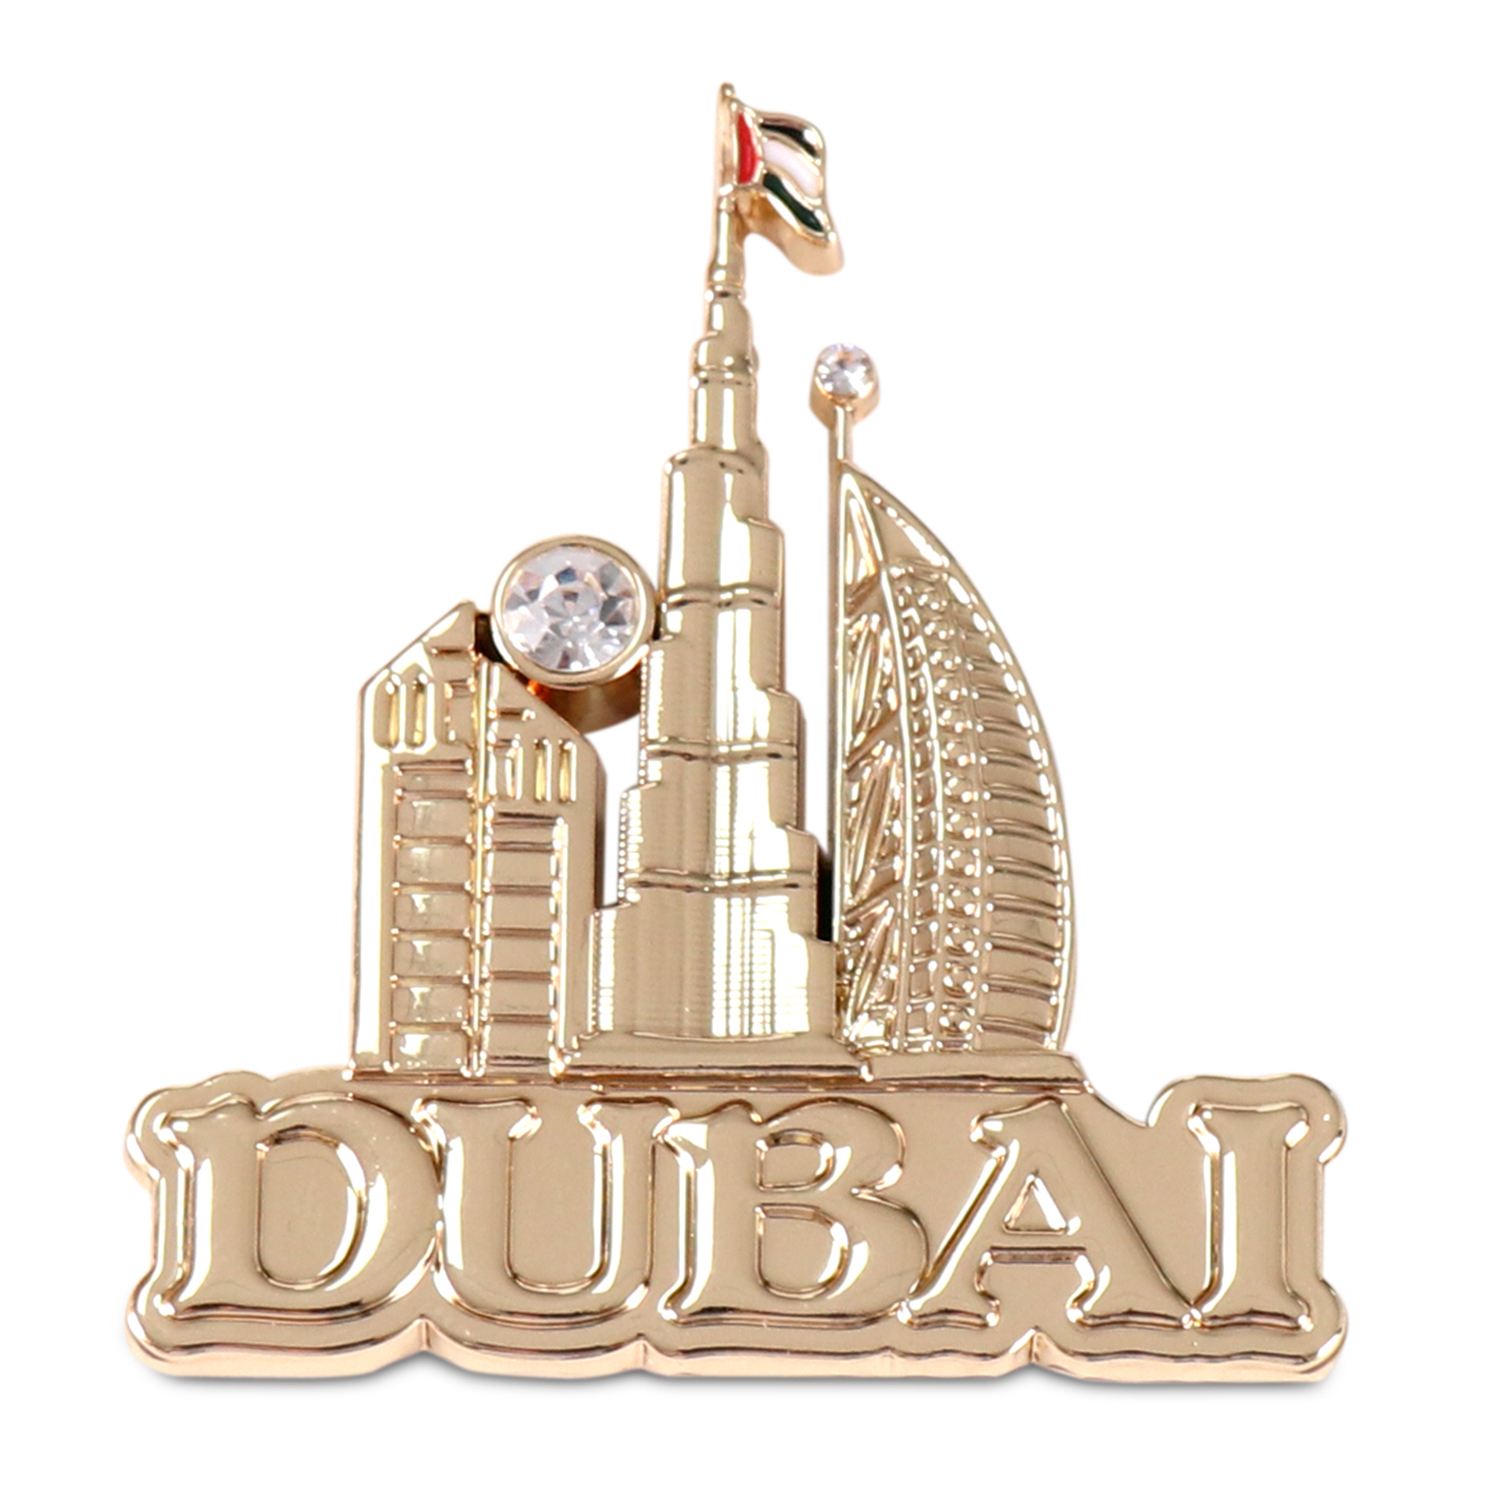 DUBAI  fridge magnet with  Burj Al Arab Hotel & Burj Khalifa Tower